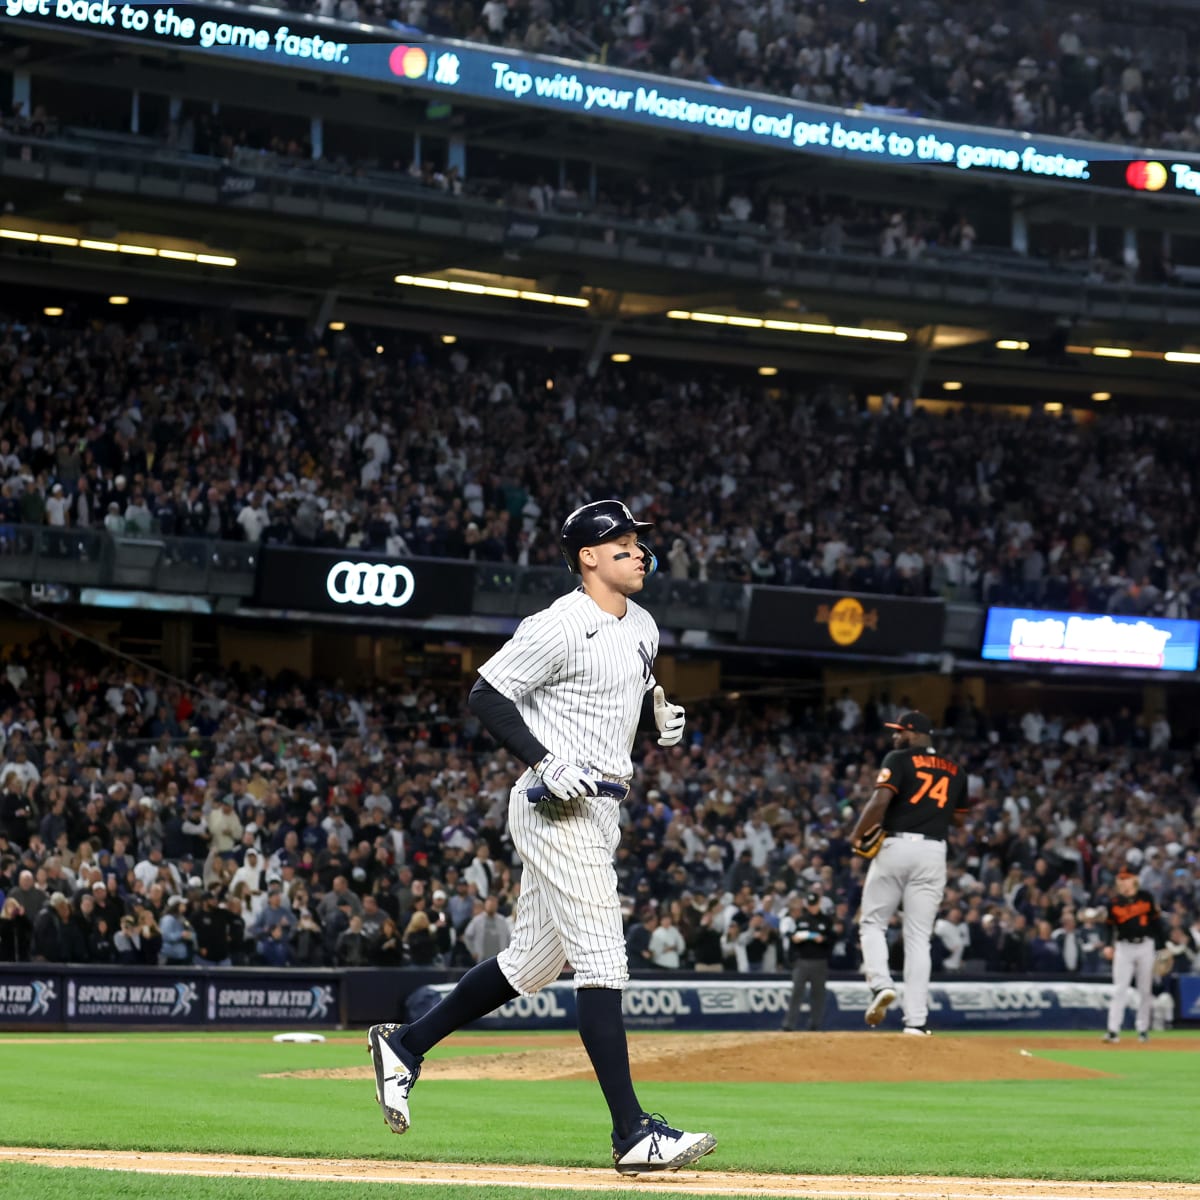 Aaron Judge eyes Roger Maris' HR record during Yankees next homestand